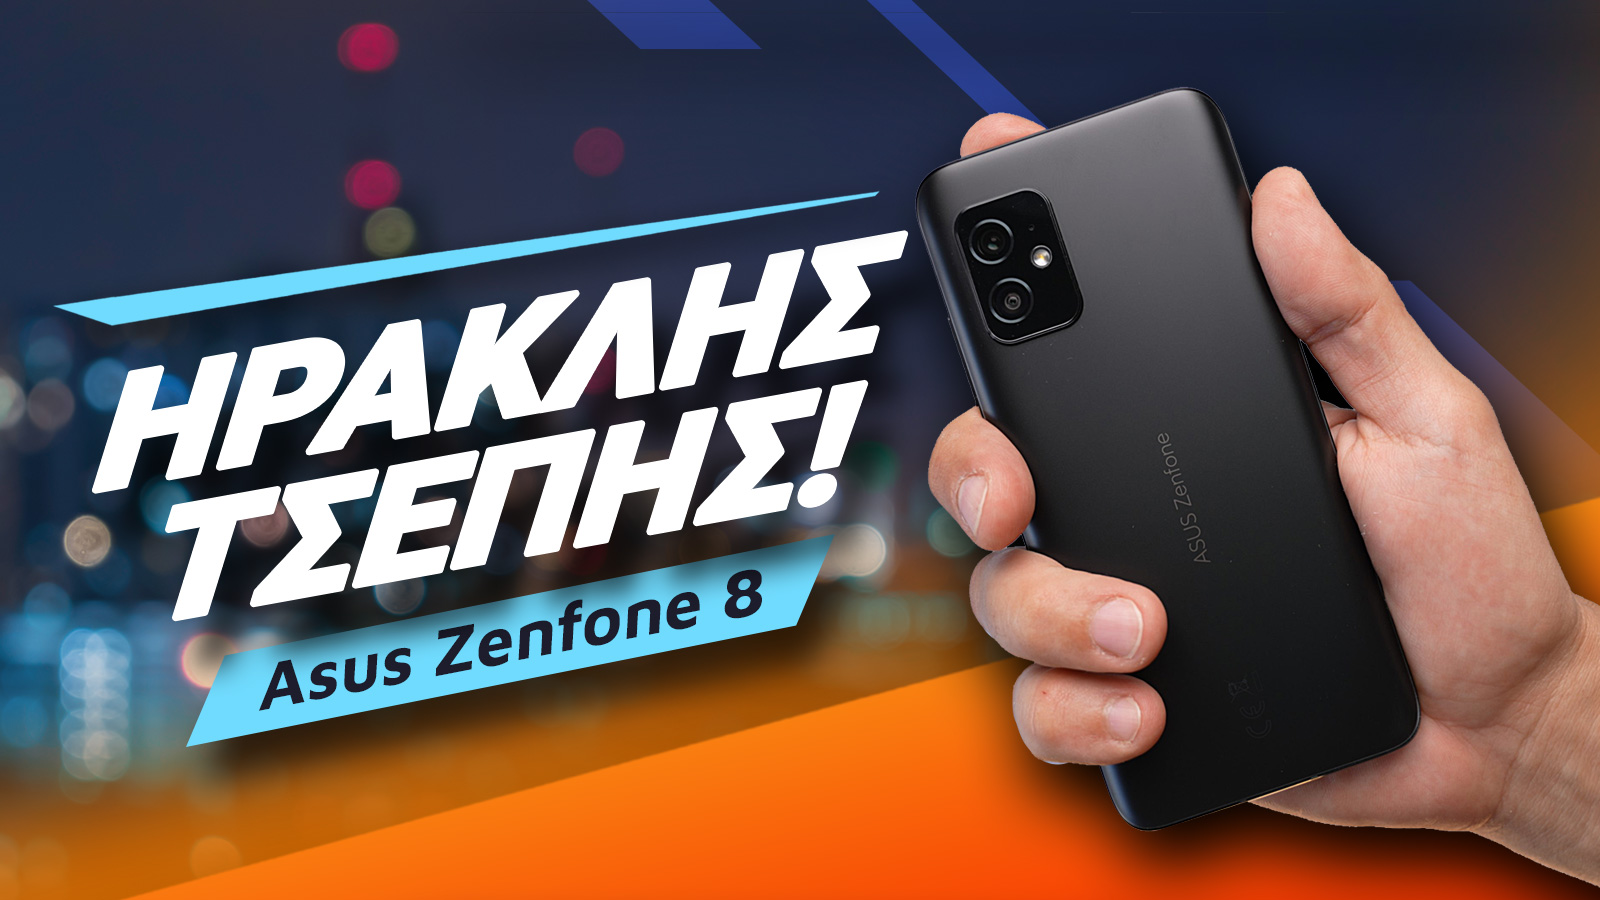 , ASUS Zenfone 8 review: Ηρακλής Τσέπης